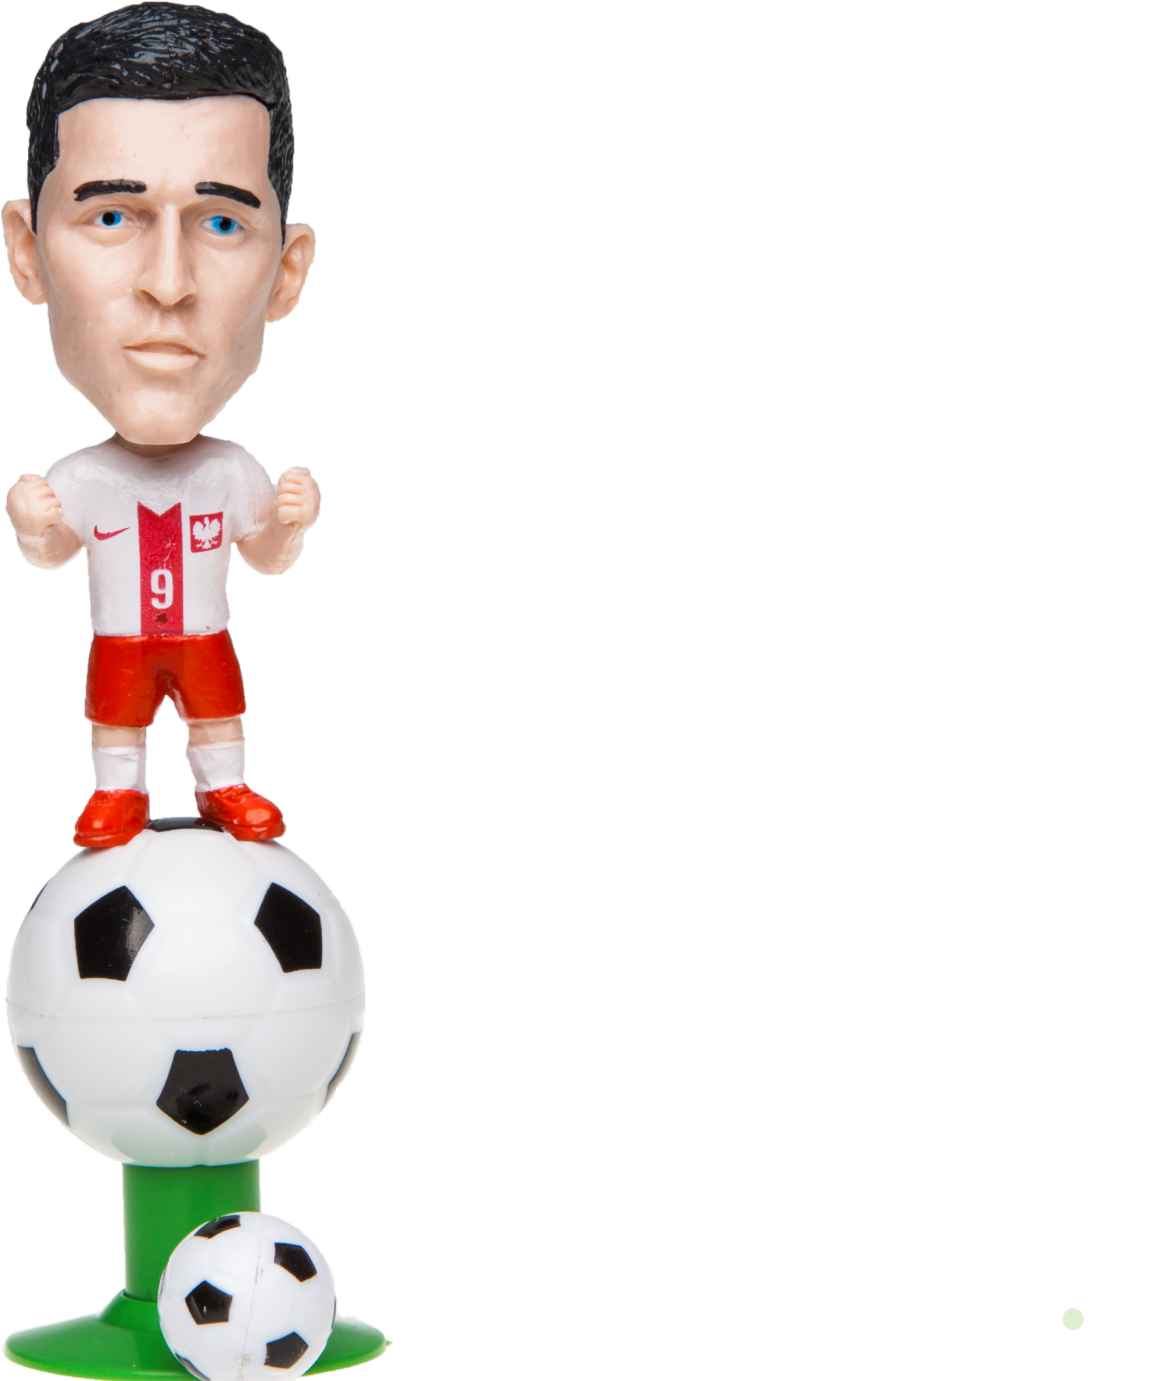 Soccer Star Bobblehead Figurine PNG